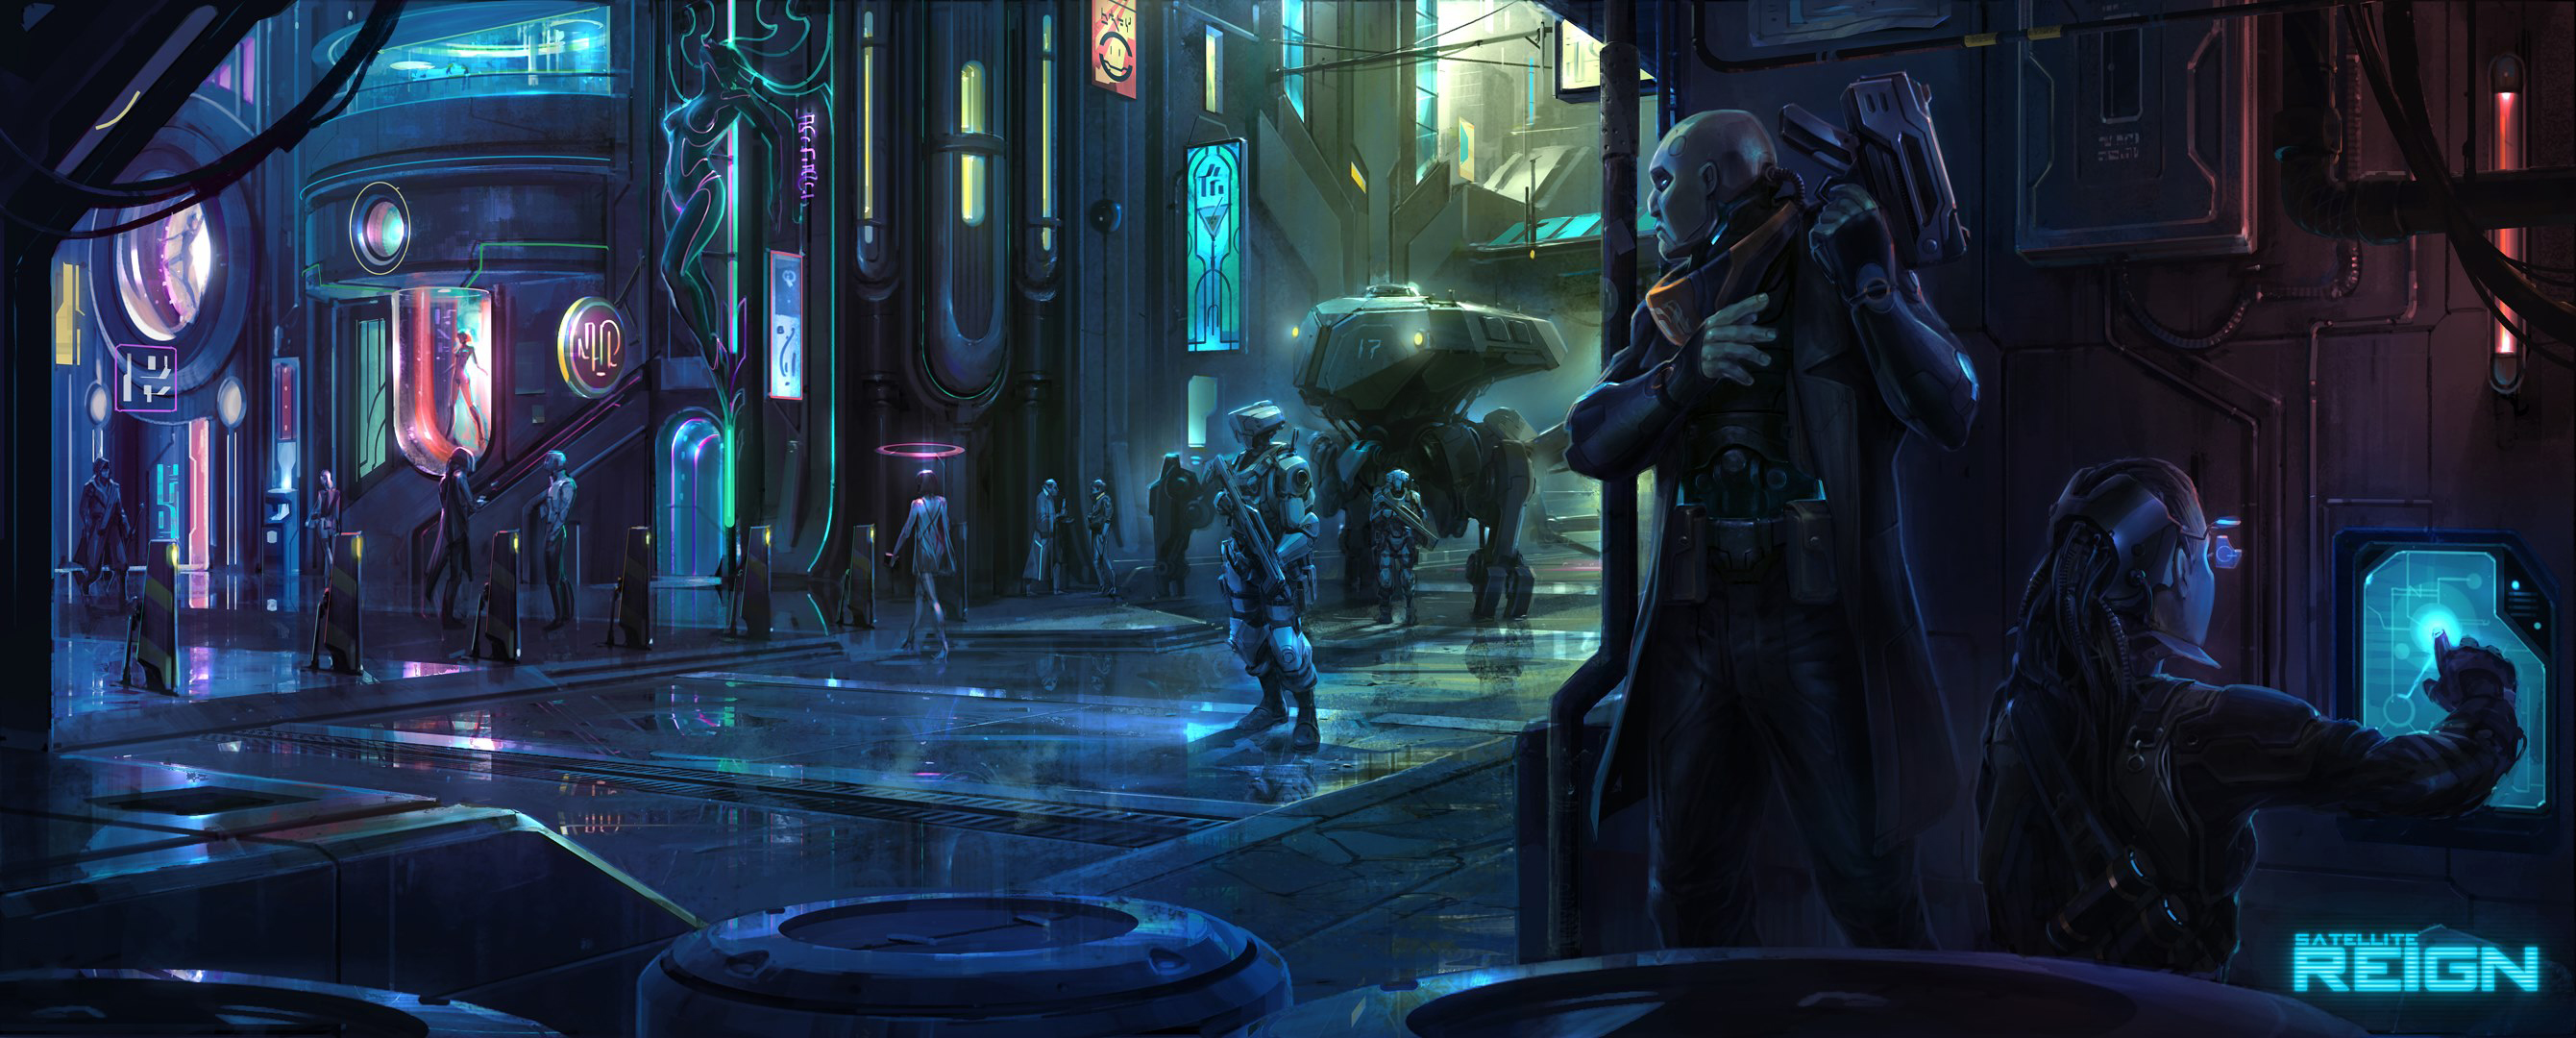 Video Games In Cyberpunk Cities - HD Wallpaper 